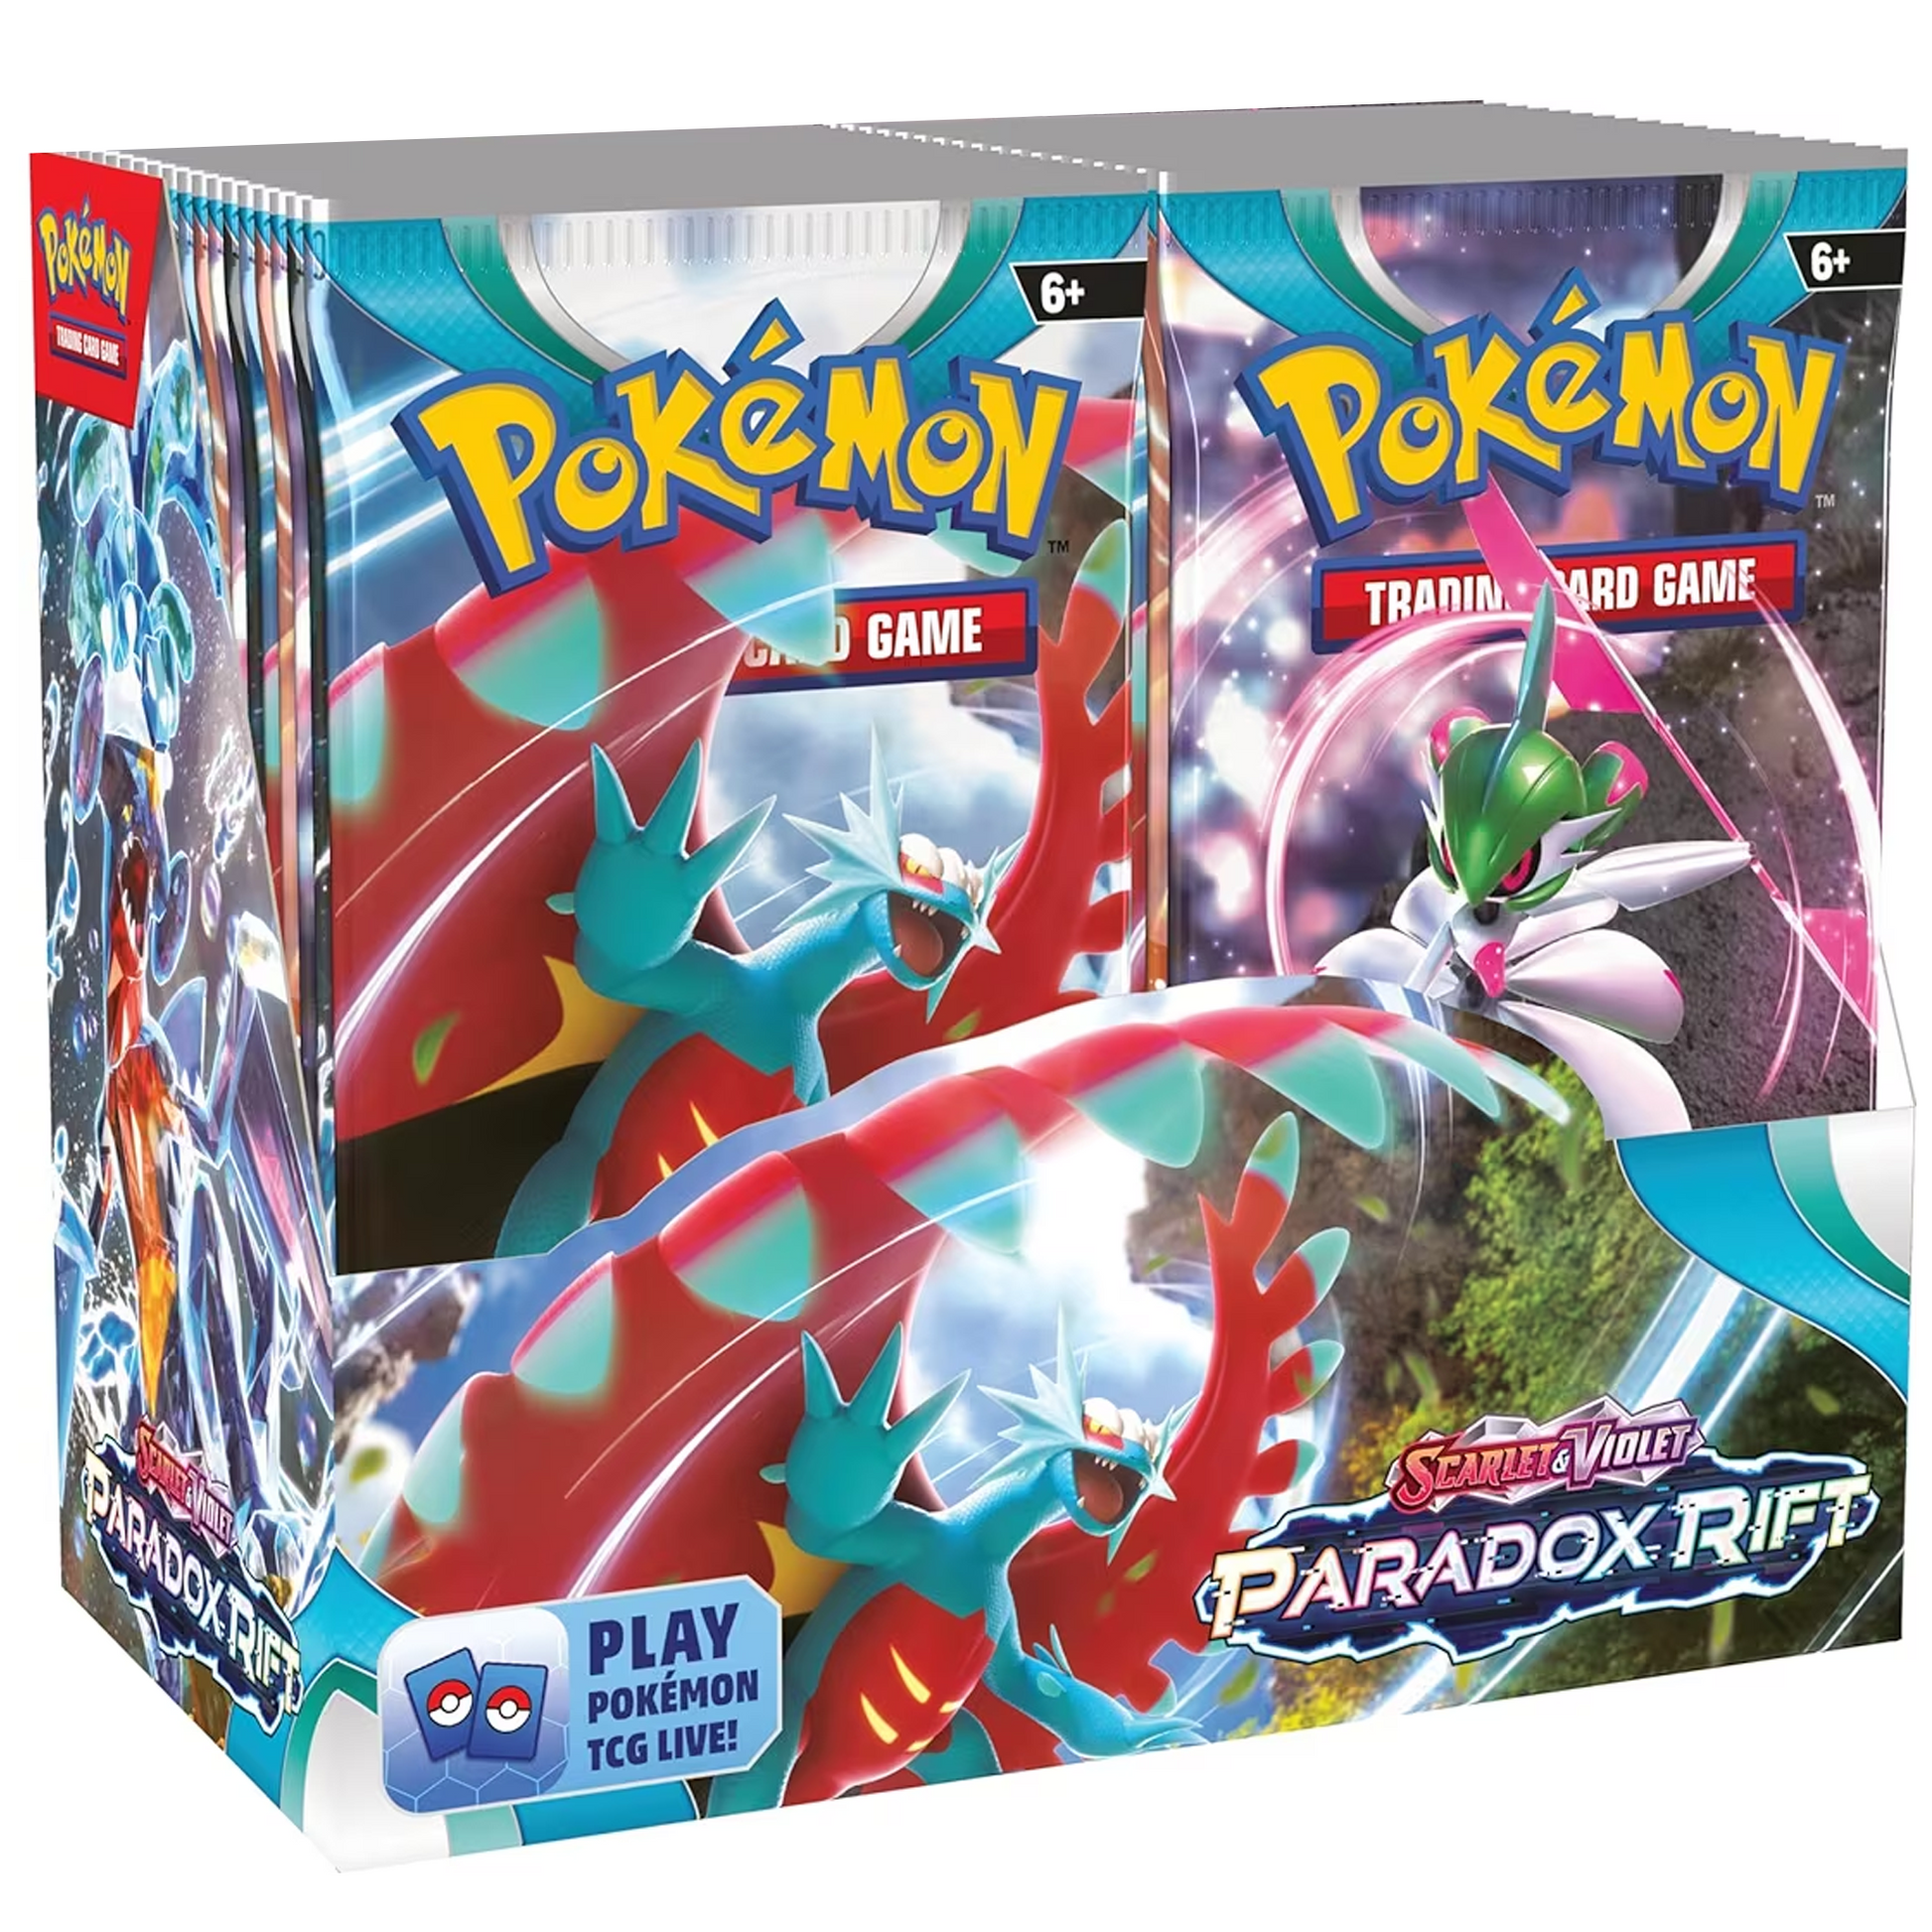 Pokémon TCG Scarlet & Violet Paradox Rift Booster Box (Sealed) | Happy Piranha